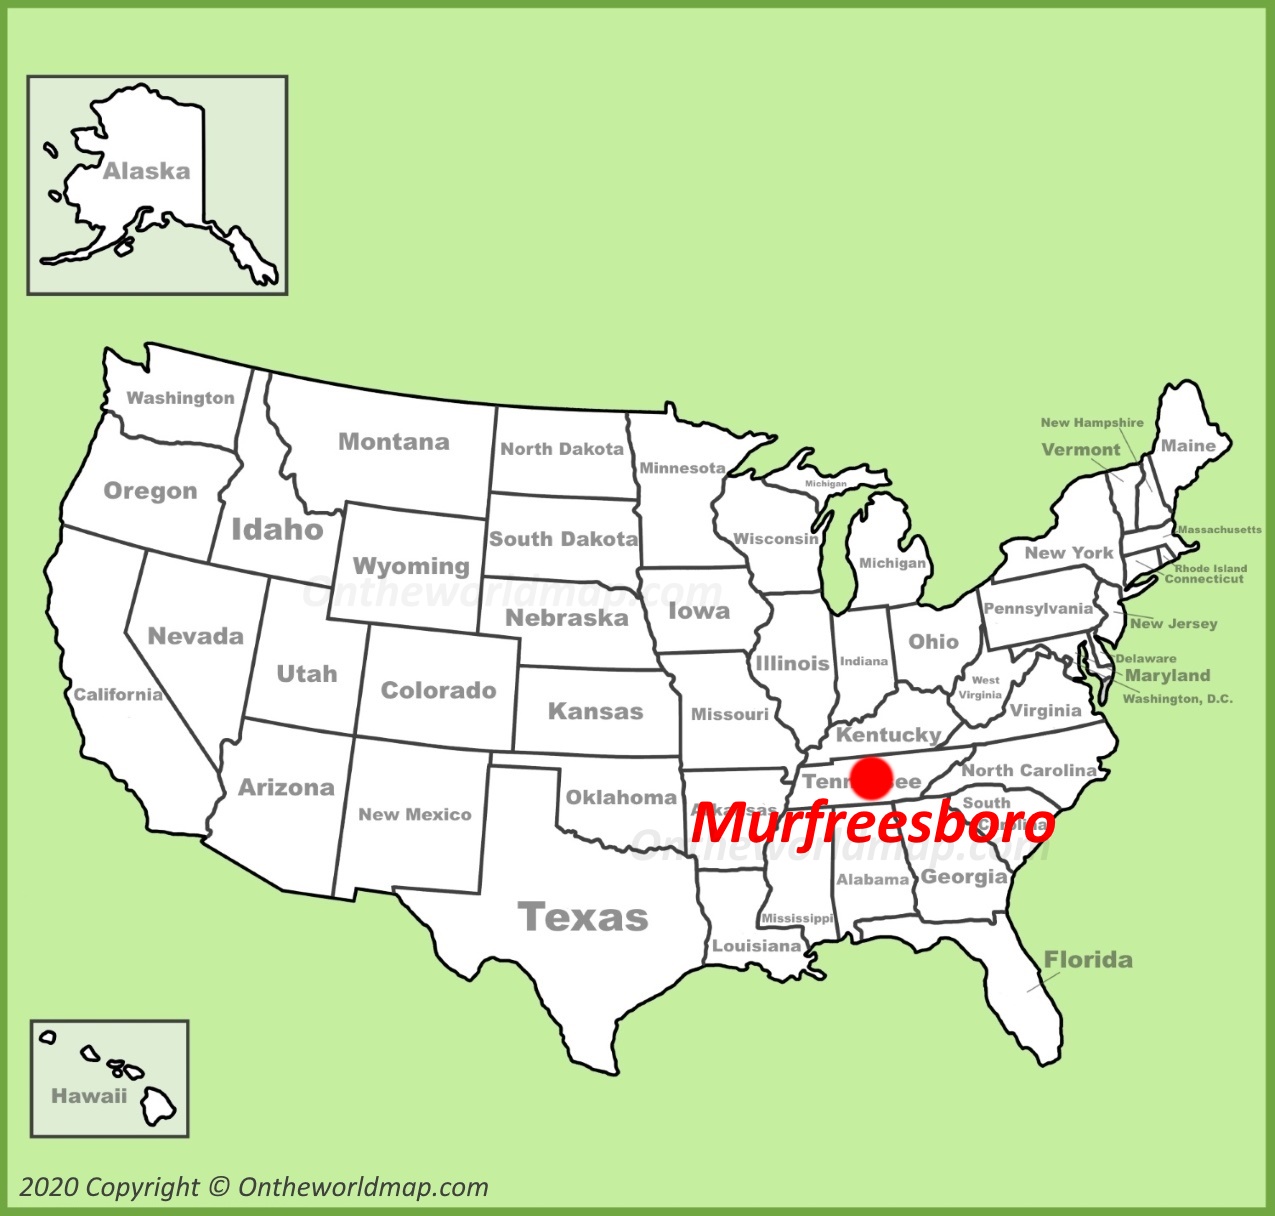 Murfreesboro Location On The Us Map 